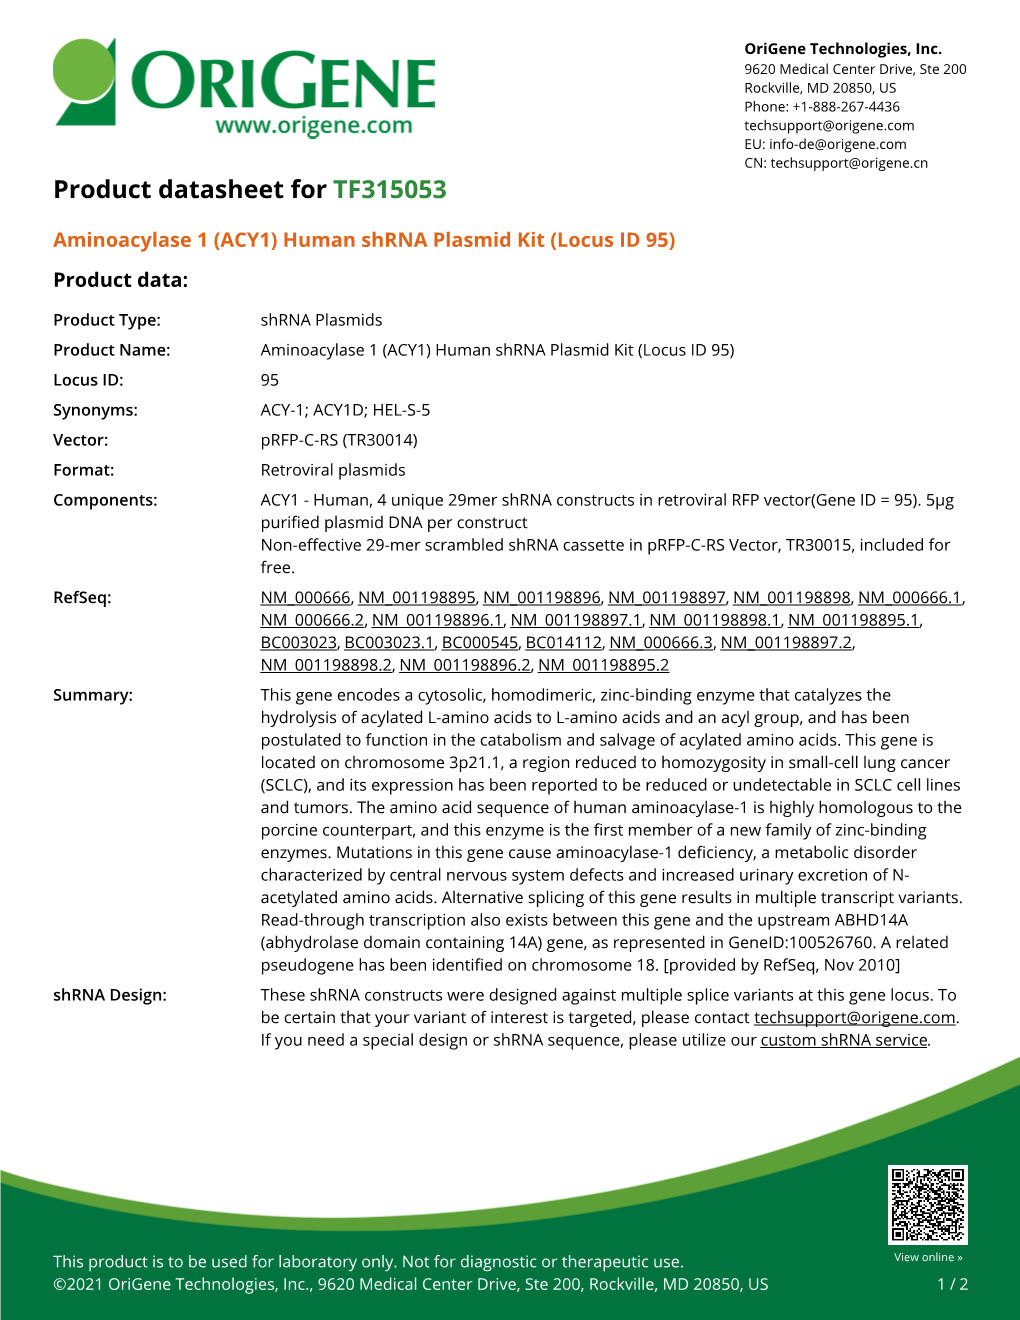 Aminoacylase 1 (ACY1) Human Shrna Plasmid Kit (Locus ID 95) Product Data